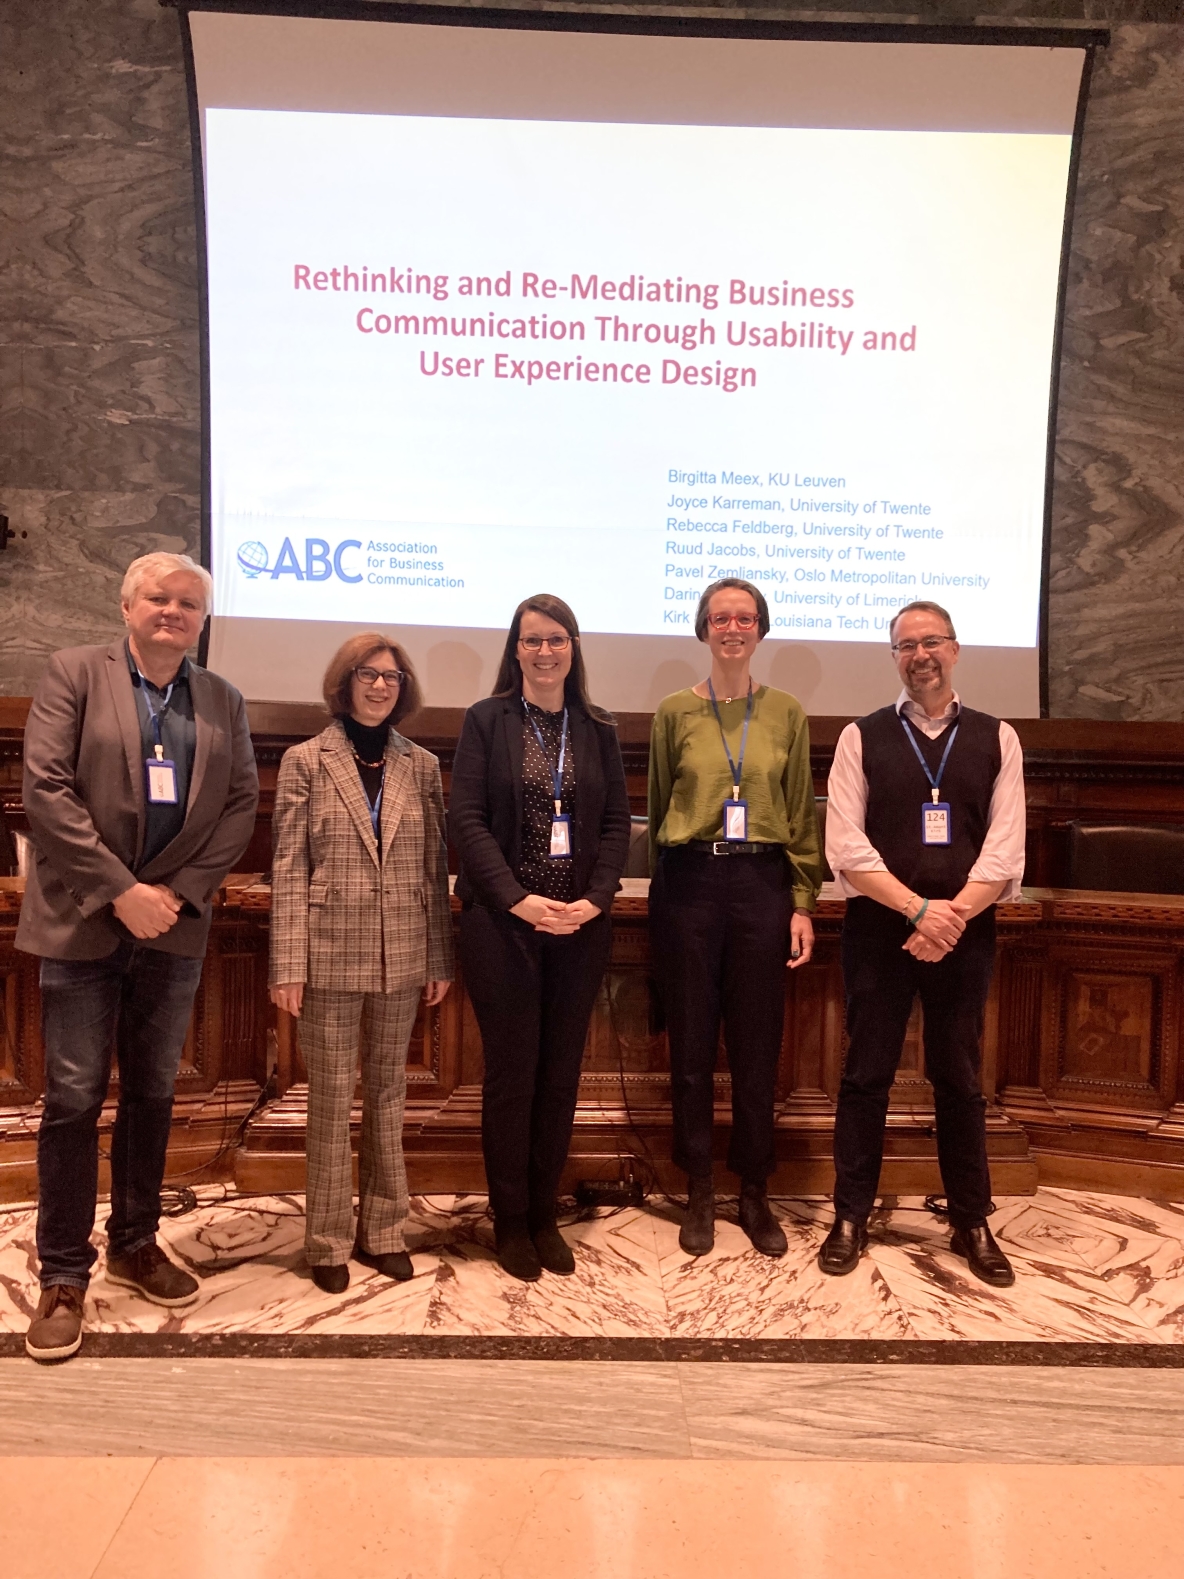 Panel presenters Pavel Zemliansky, Birgitta Meex, Darina Slattery, Joyce Karreman, and Kirk St.Amant smiling for a photo in front of a PowerPoint slide.